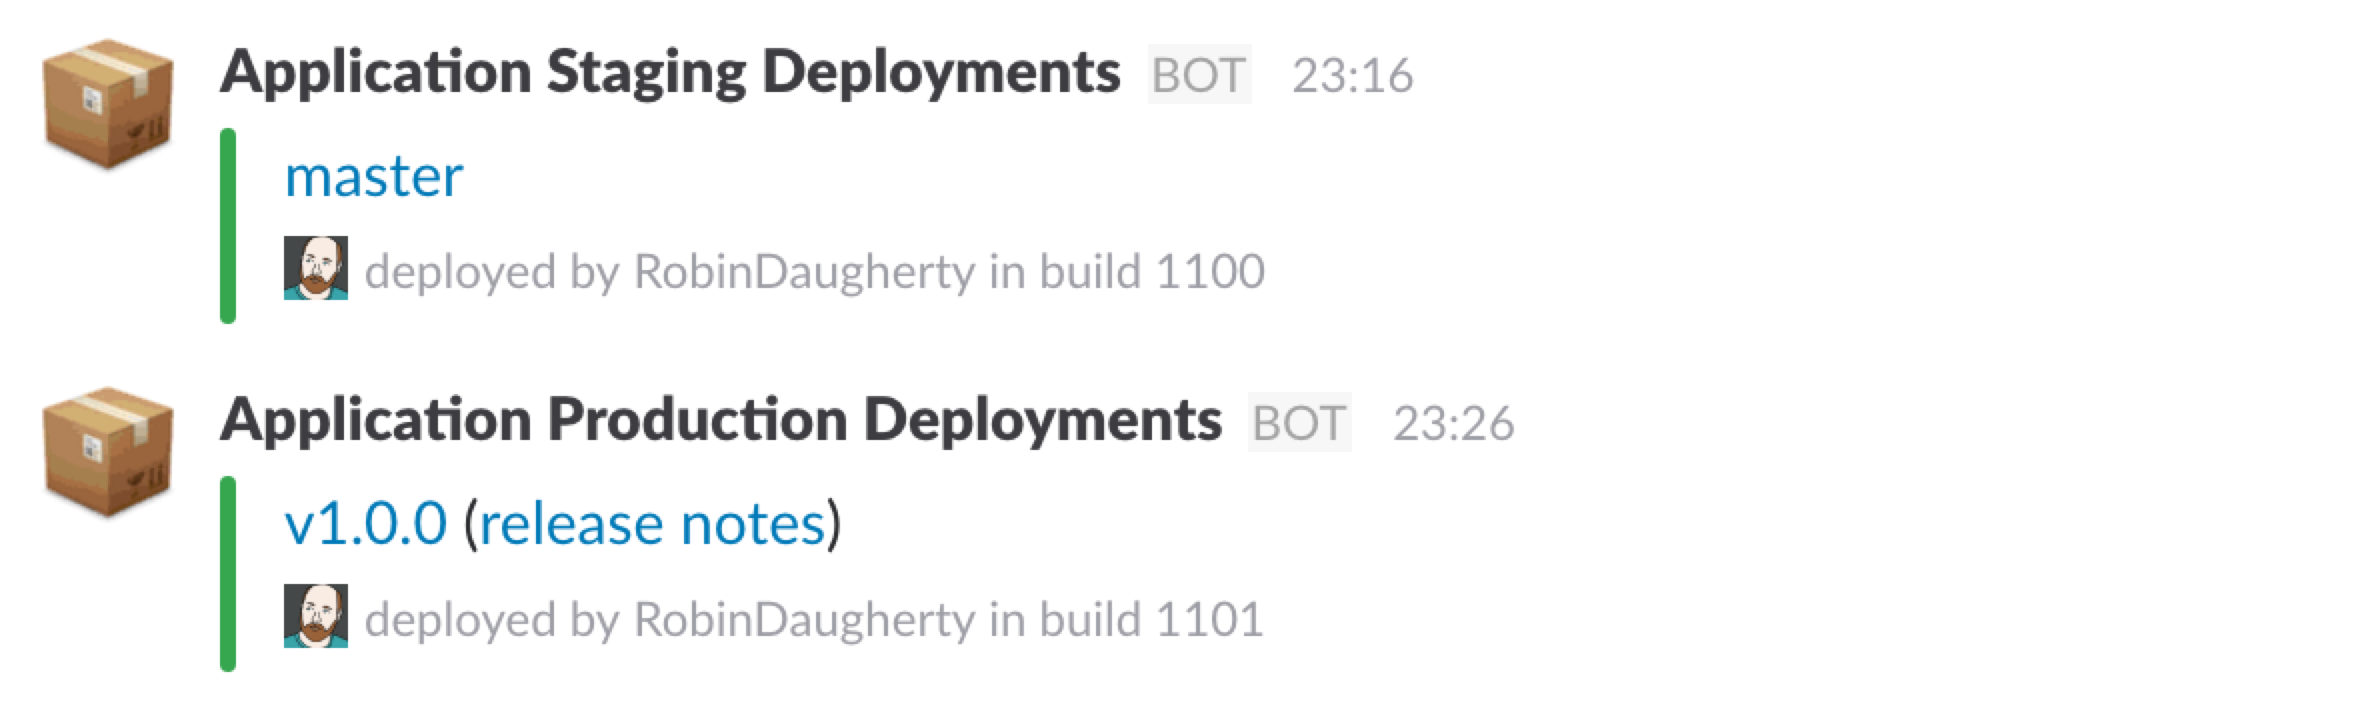 slack-deployment-notifications.png